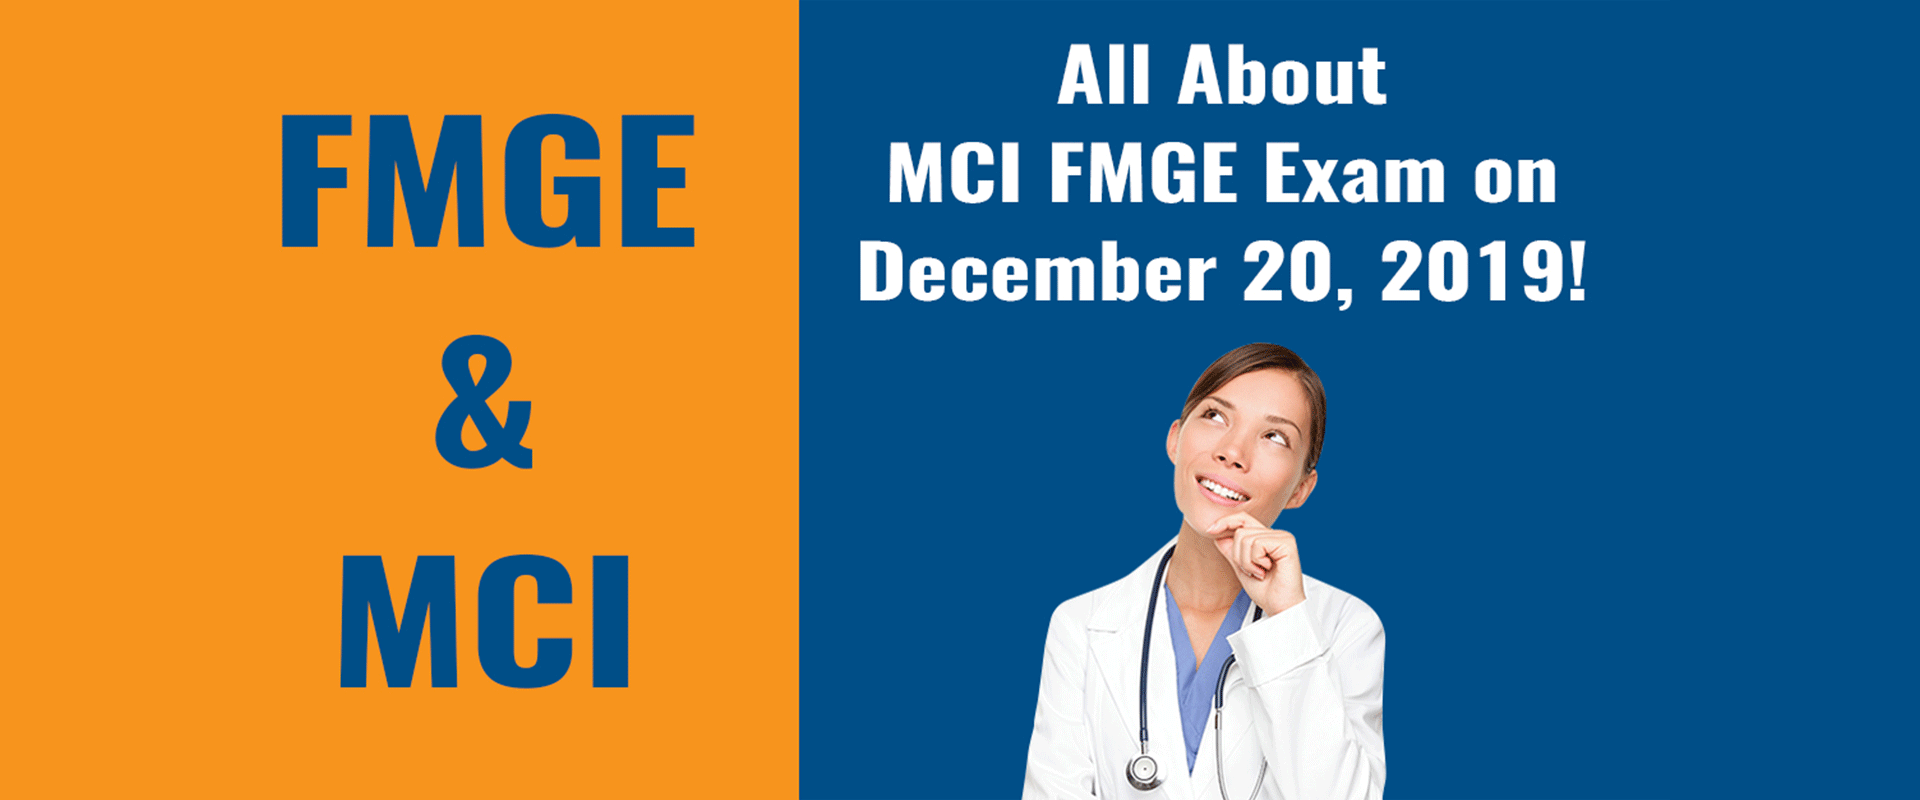 MCI FMG Exam on December 